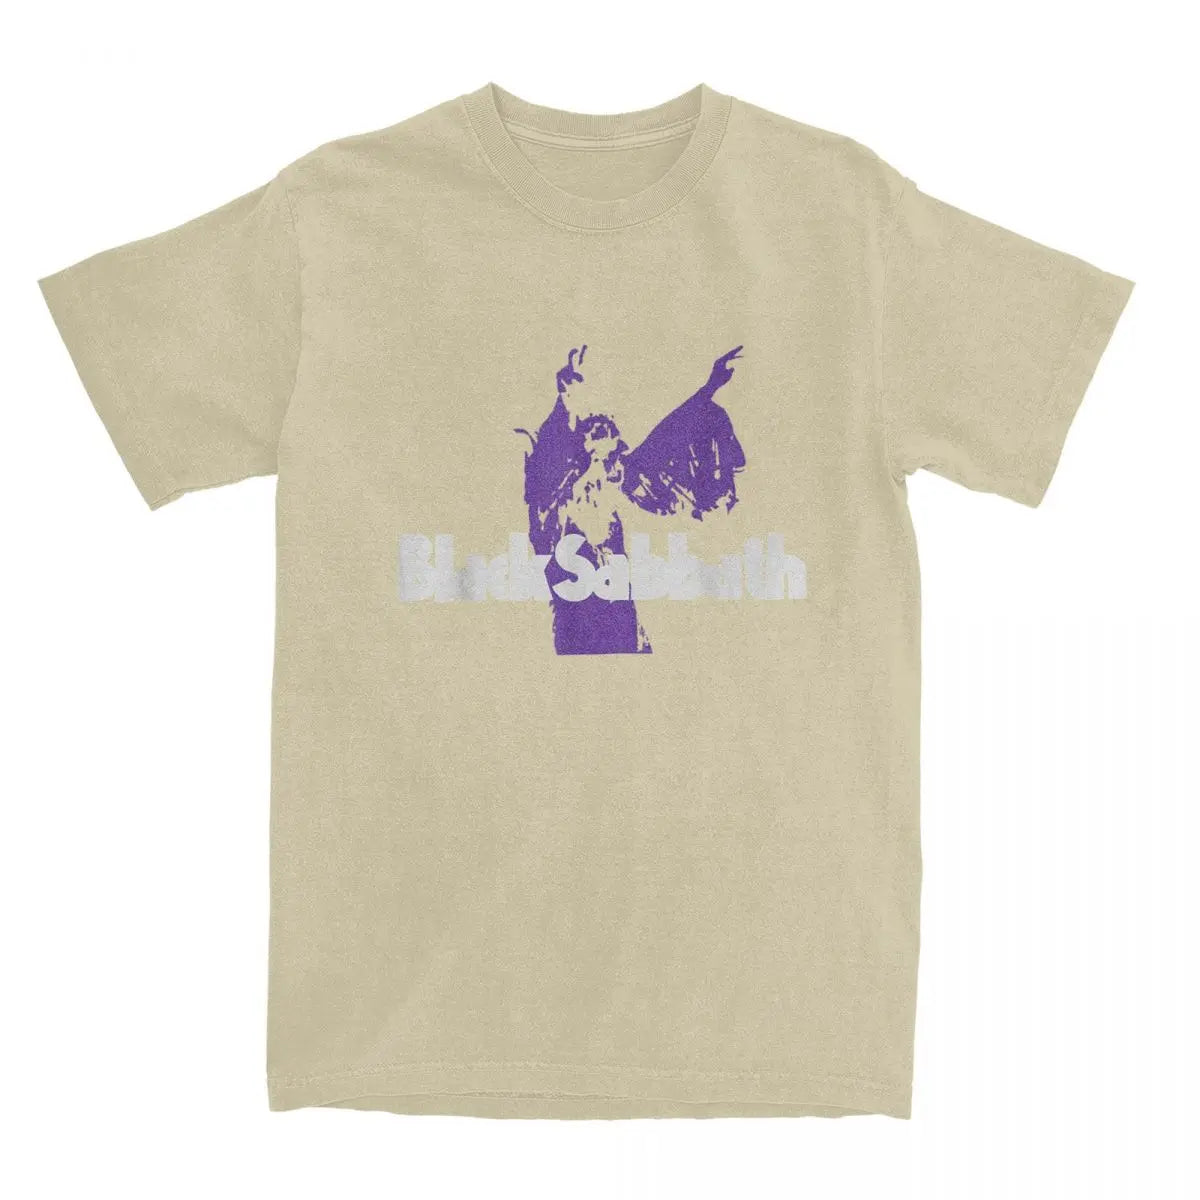 Men Women's Black Sabbaths Free Official Purple Rock Band T Shirt Merch metal music Pure Cotton T-shirt Clothes Vintage Tees - Lizard Vigilante